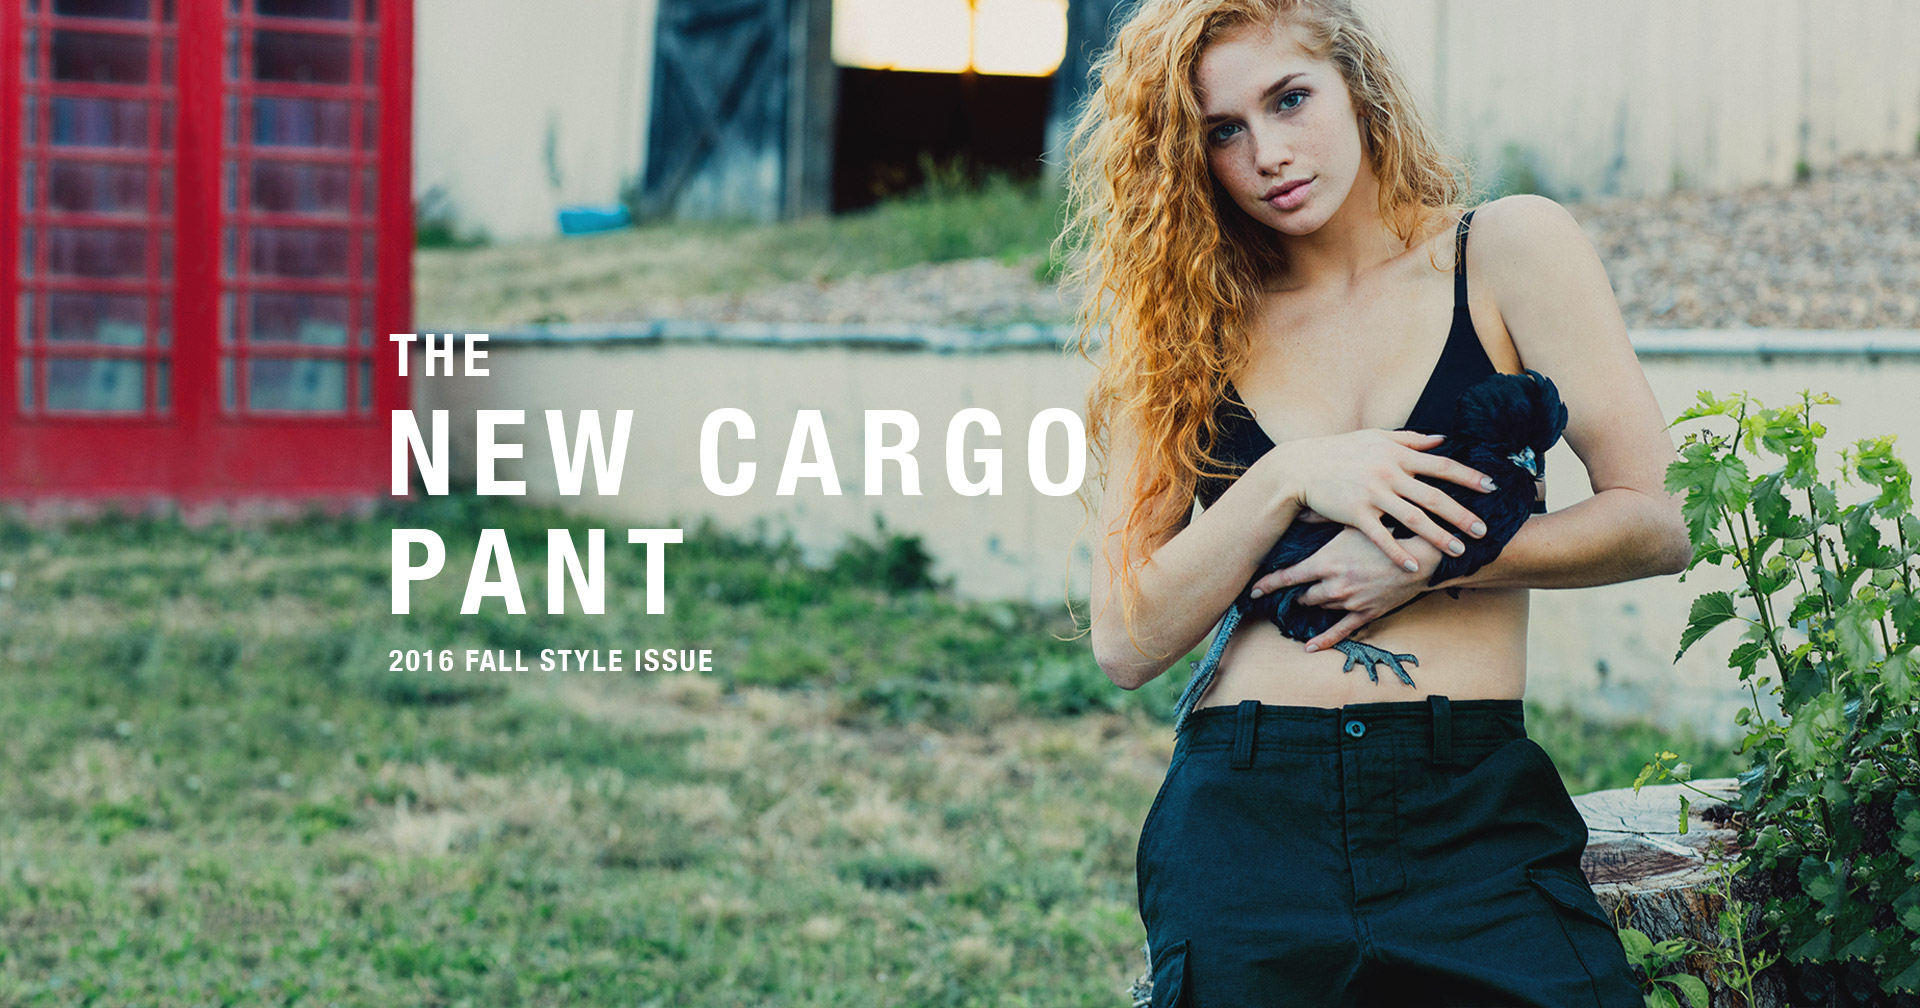 Fall Style Issue 2016 Cargo Pants - InsideHook